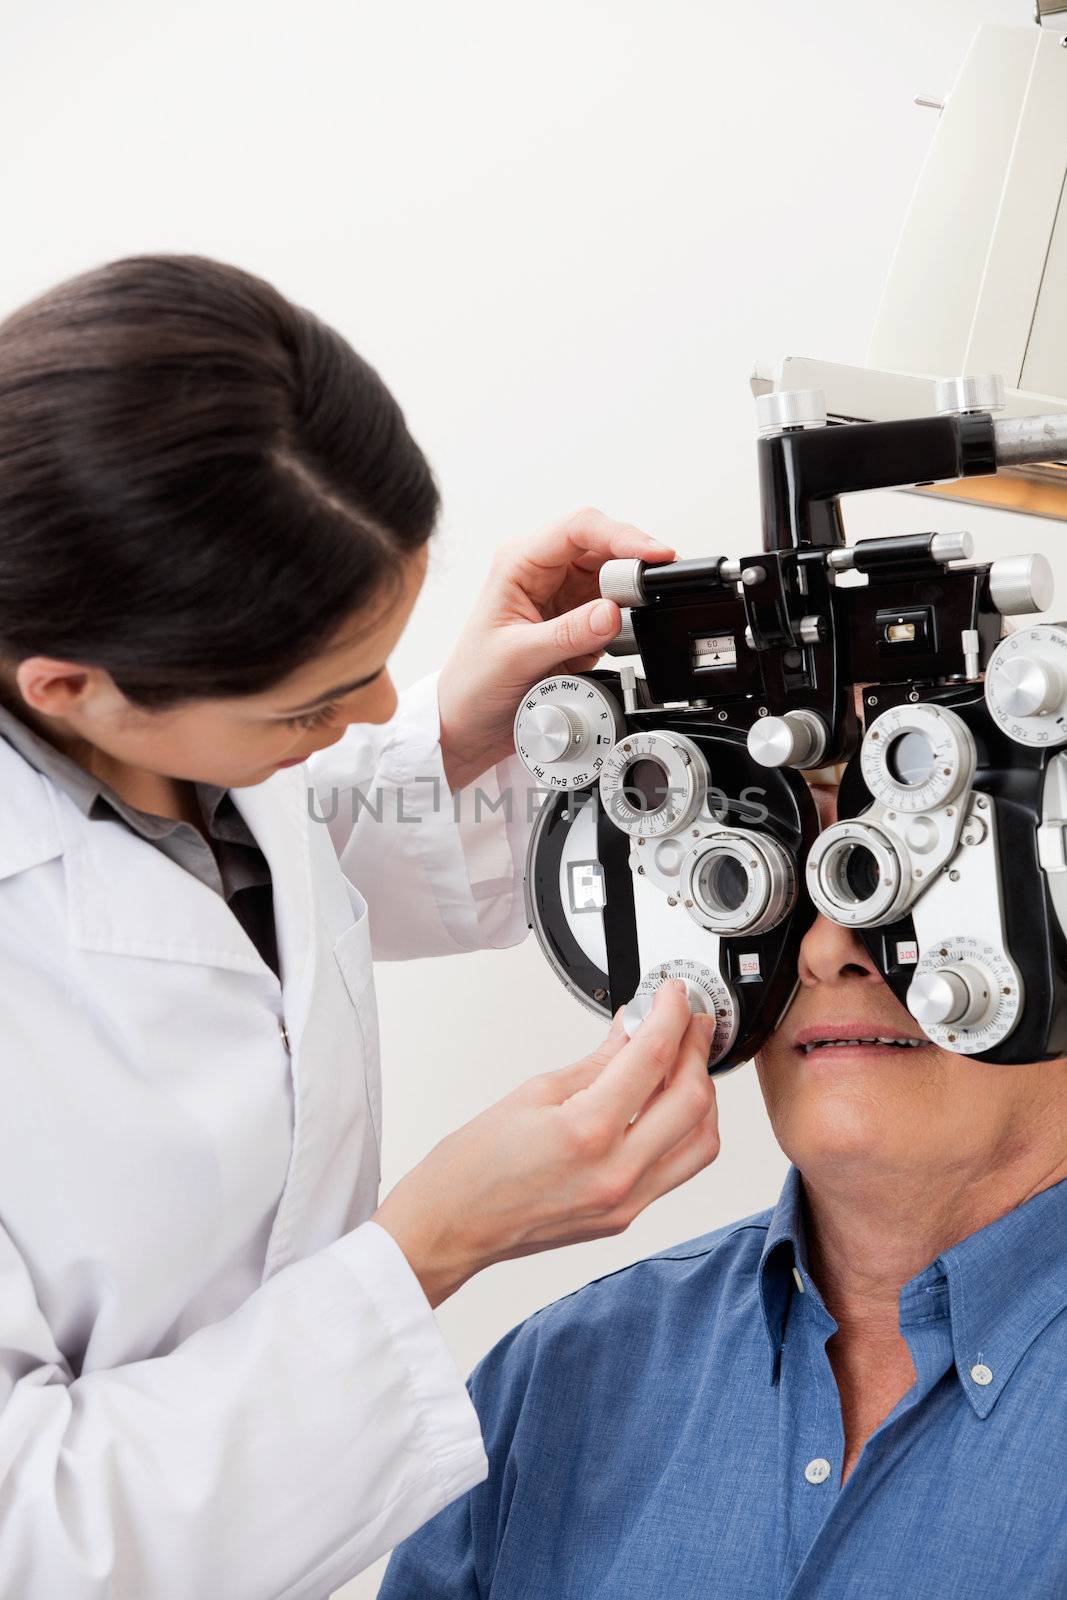 Female optometrist adjusting panels of phoropter during eye checkup